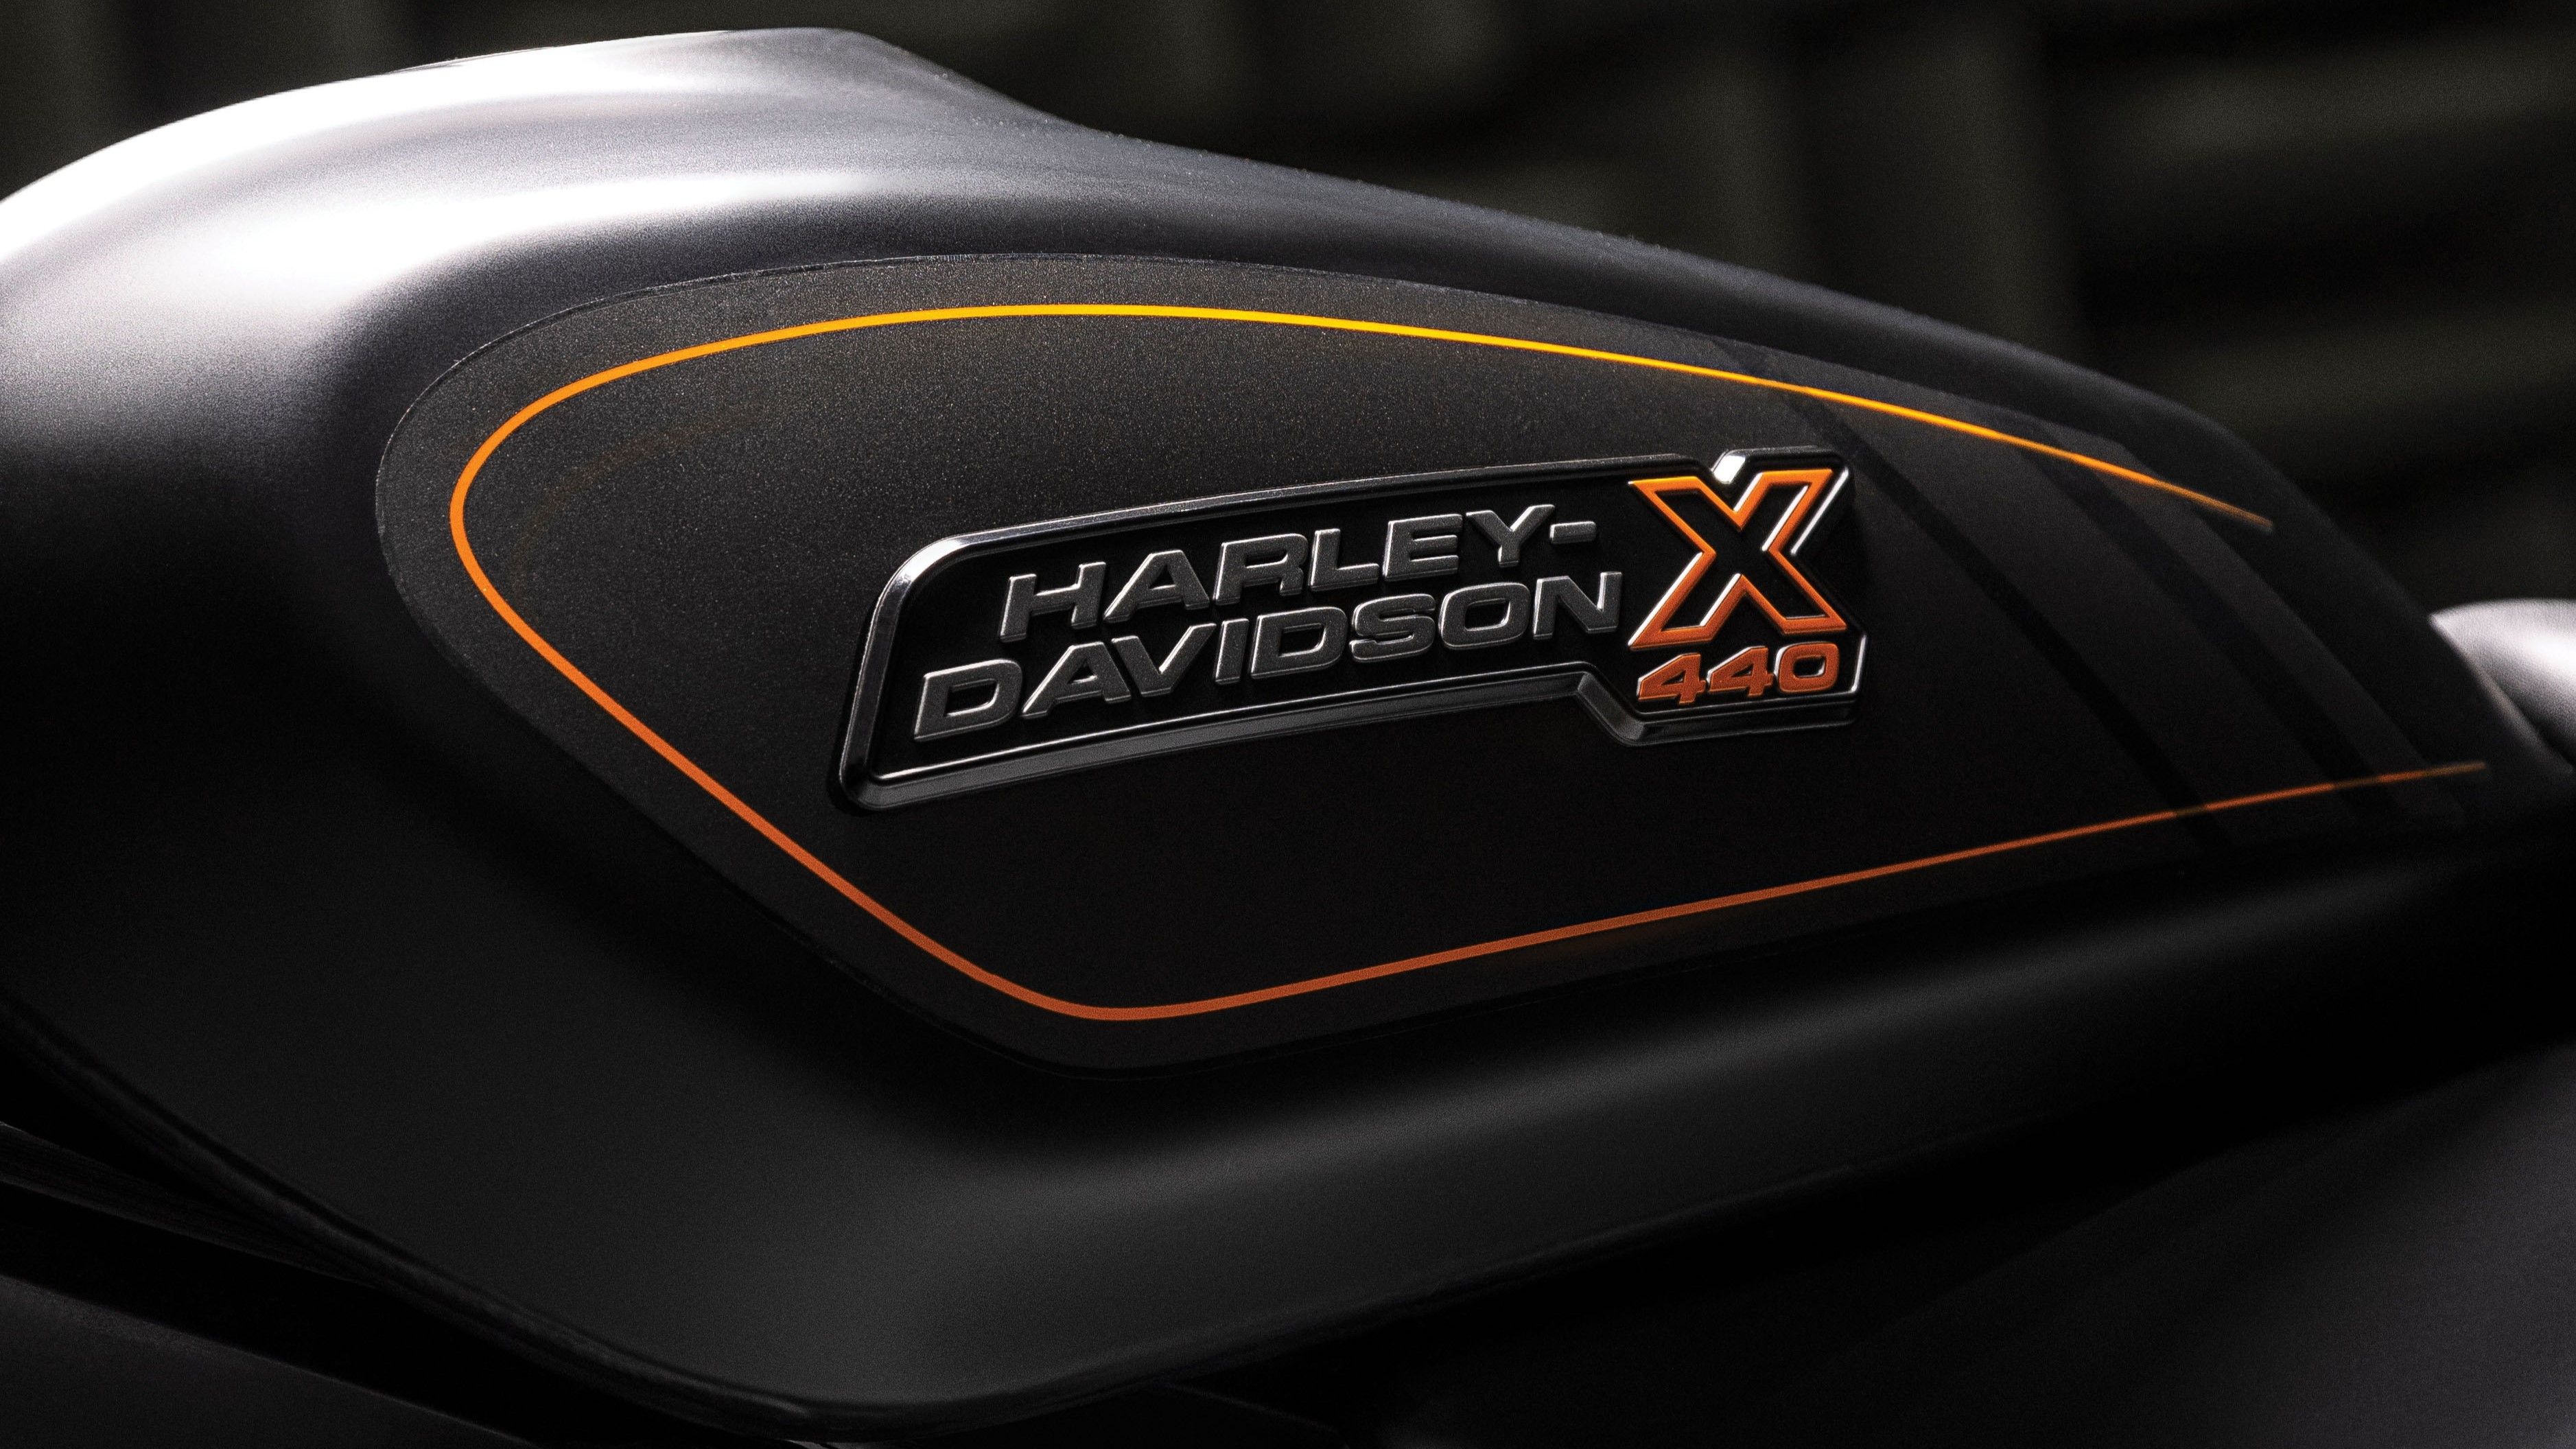 Harley-Davidson X 440 close up